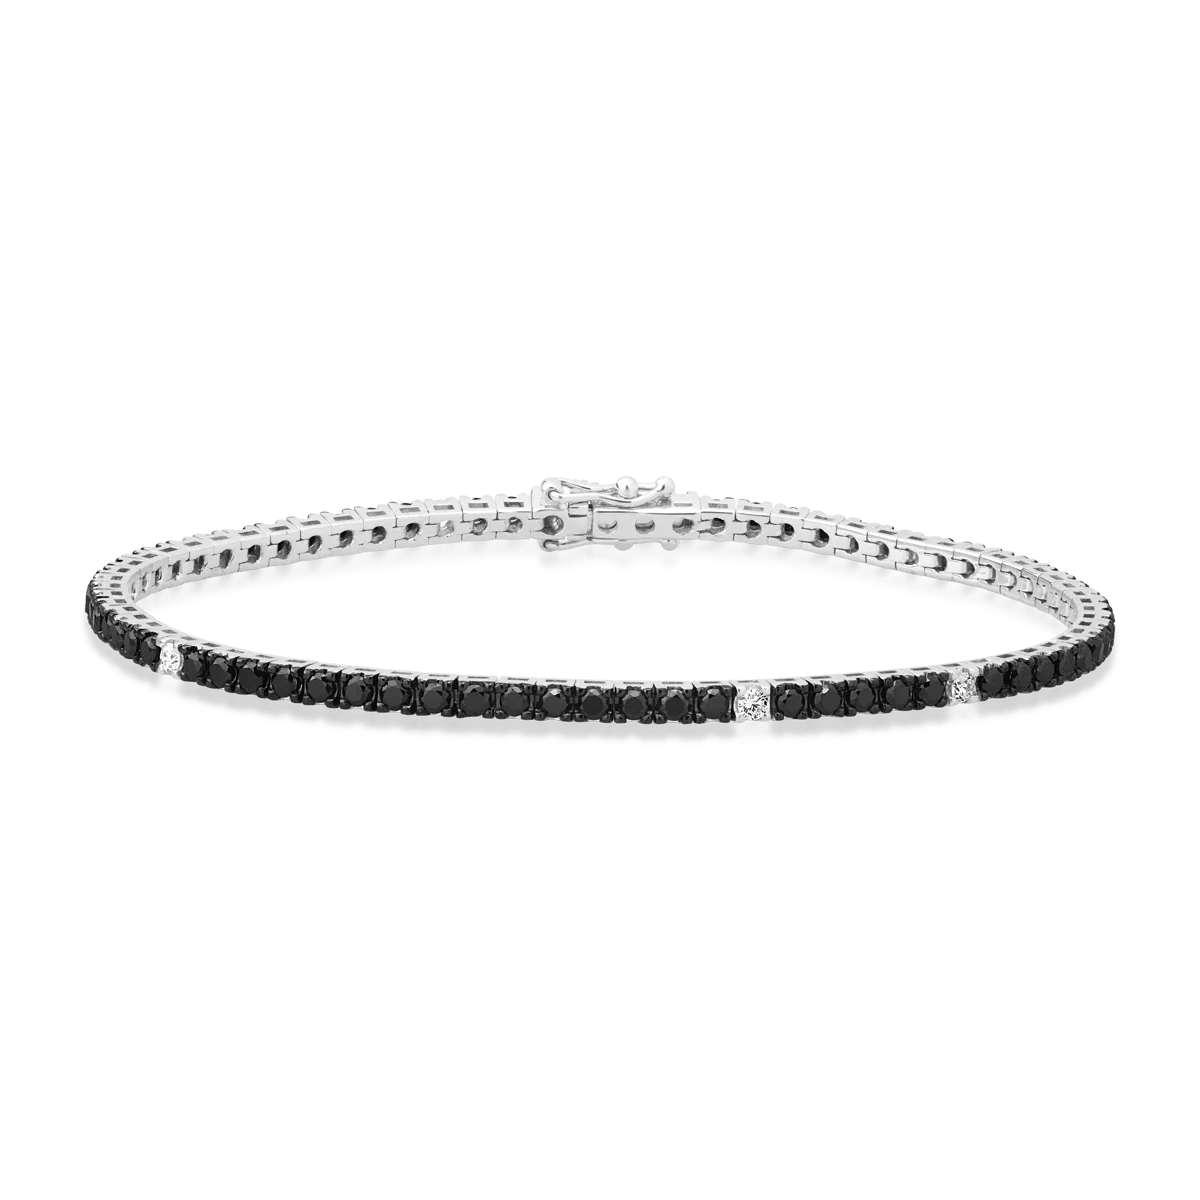 18K white gold tennis bracelet with 1.95ct black diamonds and 0.15ct white diamonds